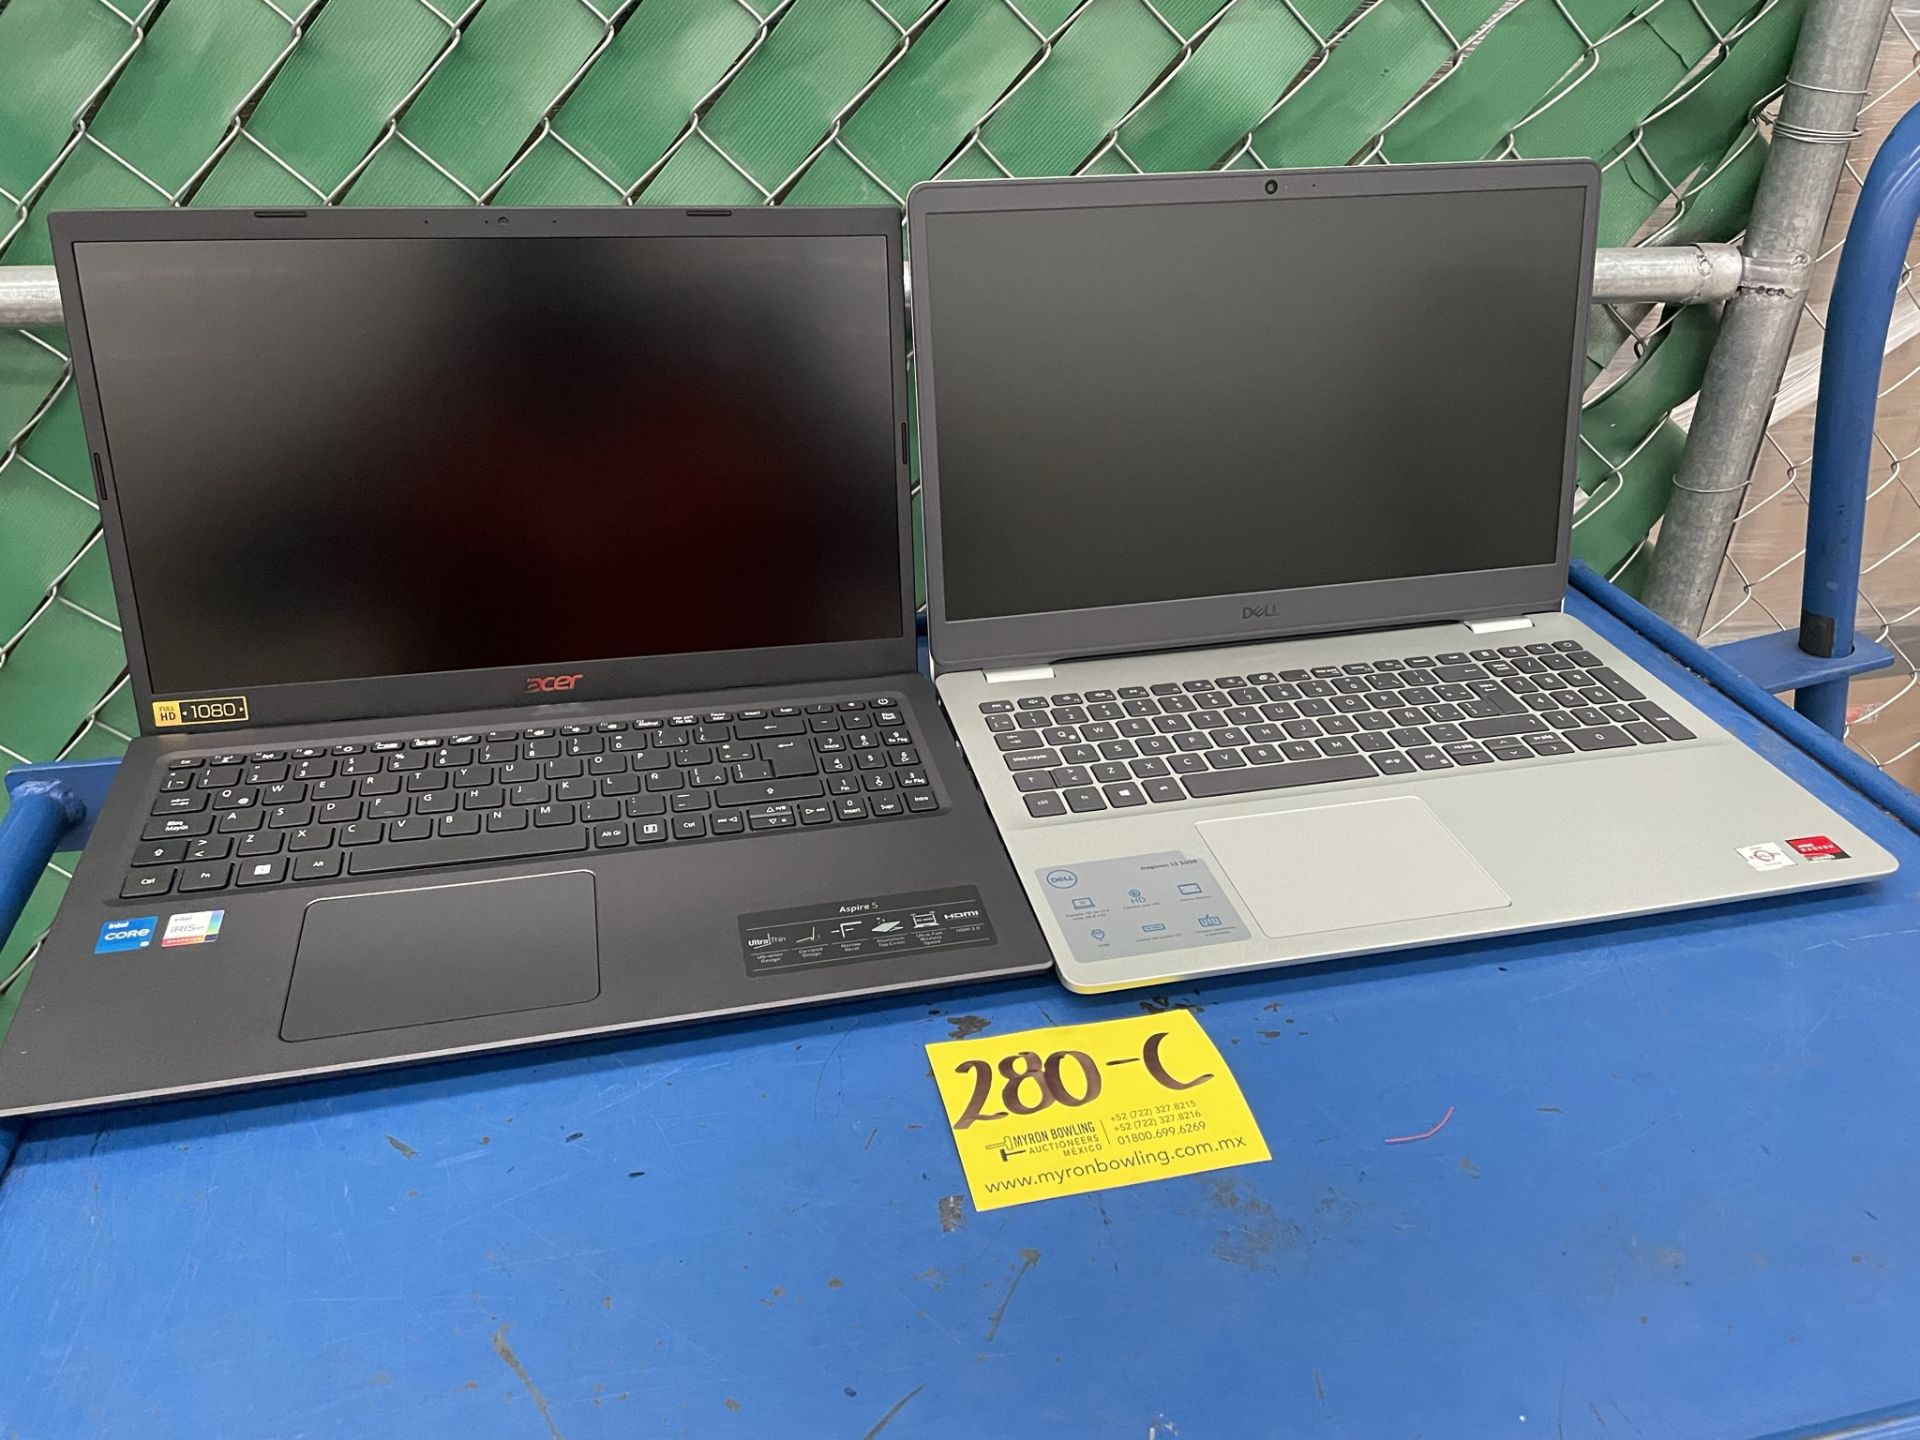 (EQUIPO NUEVO) Lote De 2 Laptops Contiene: 1 Laptop Marca DELL, Modelo I3505, Serie N/D, SO WINDOWS - Image 7 of 9